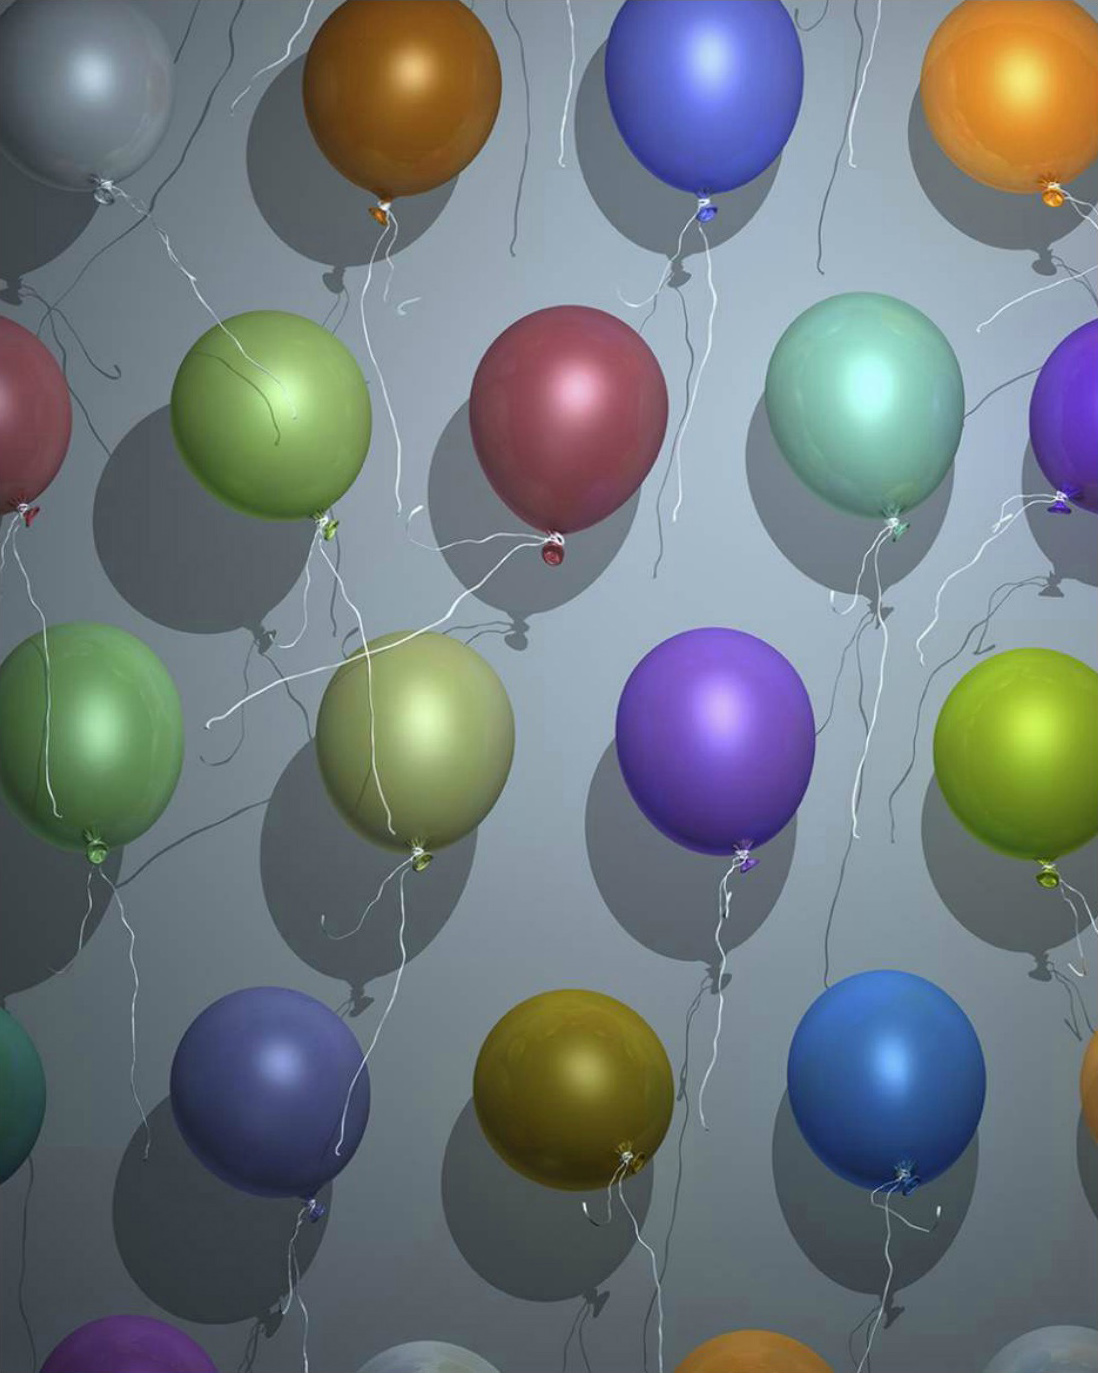 Colour of Balloons